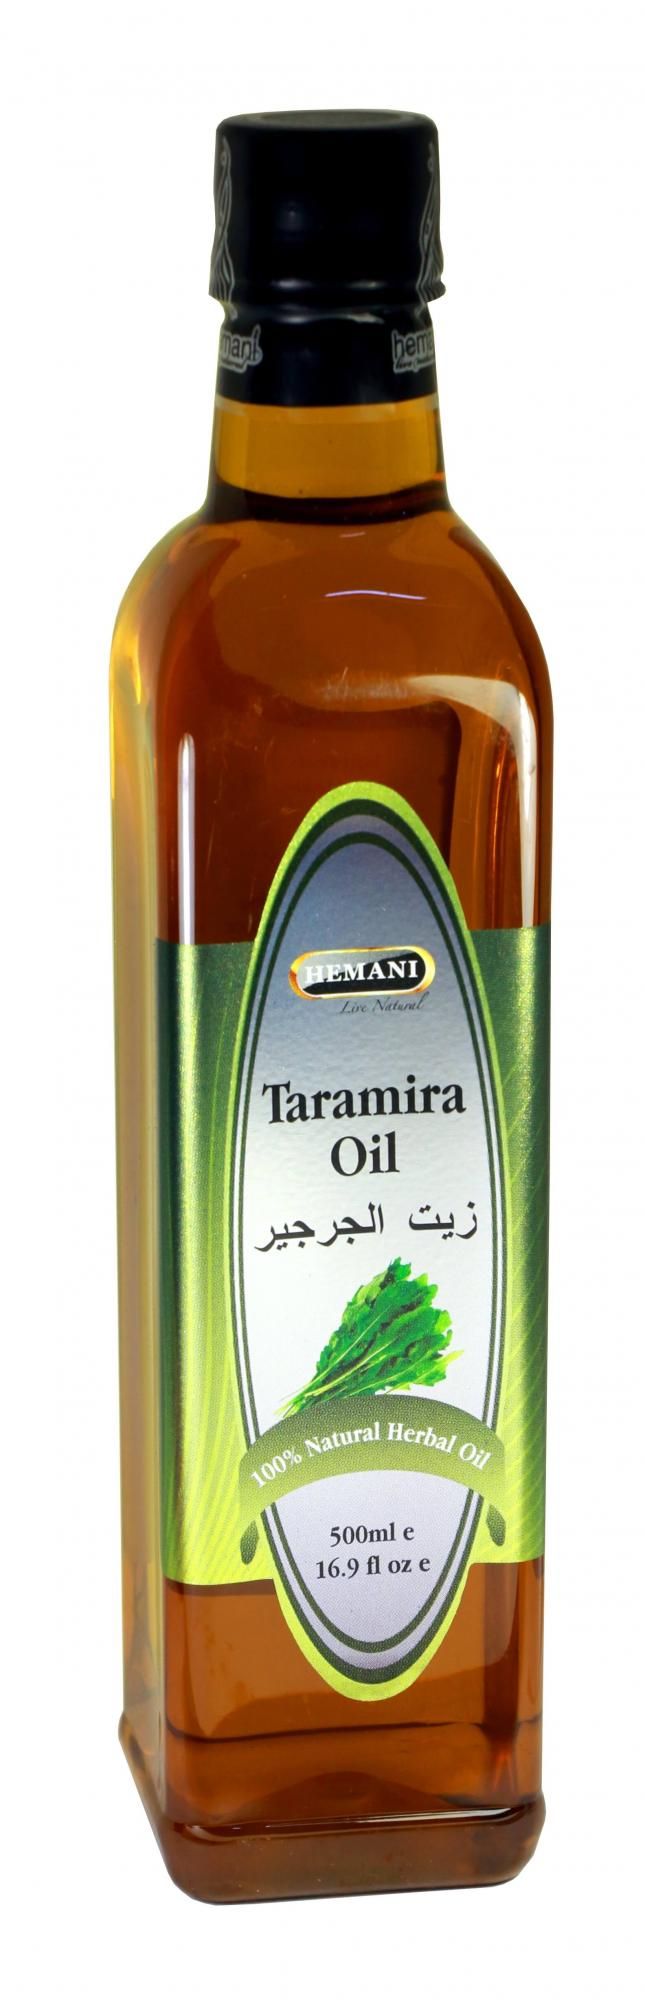 TARAMIRA Oil Hemani (Масло Усьмы (тарамира, руккола) Хемани), 500 мл.